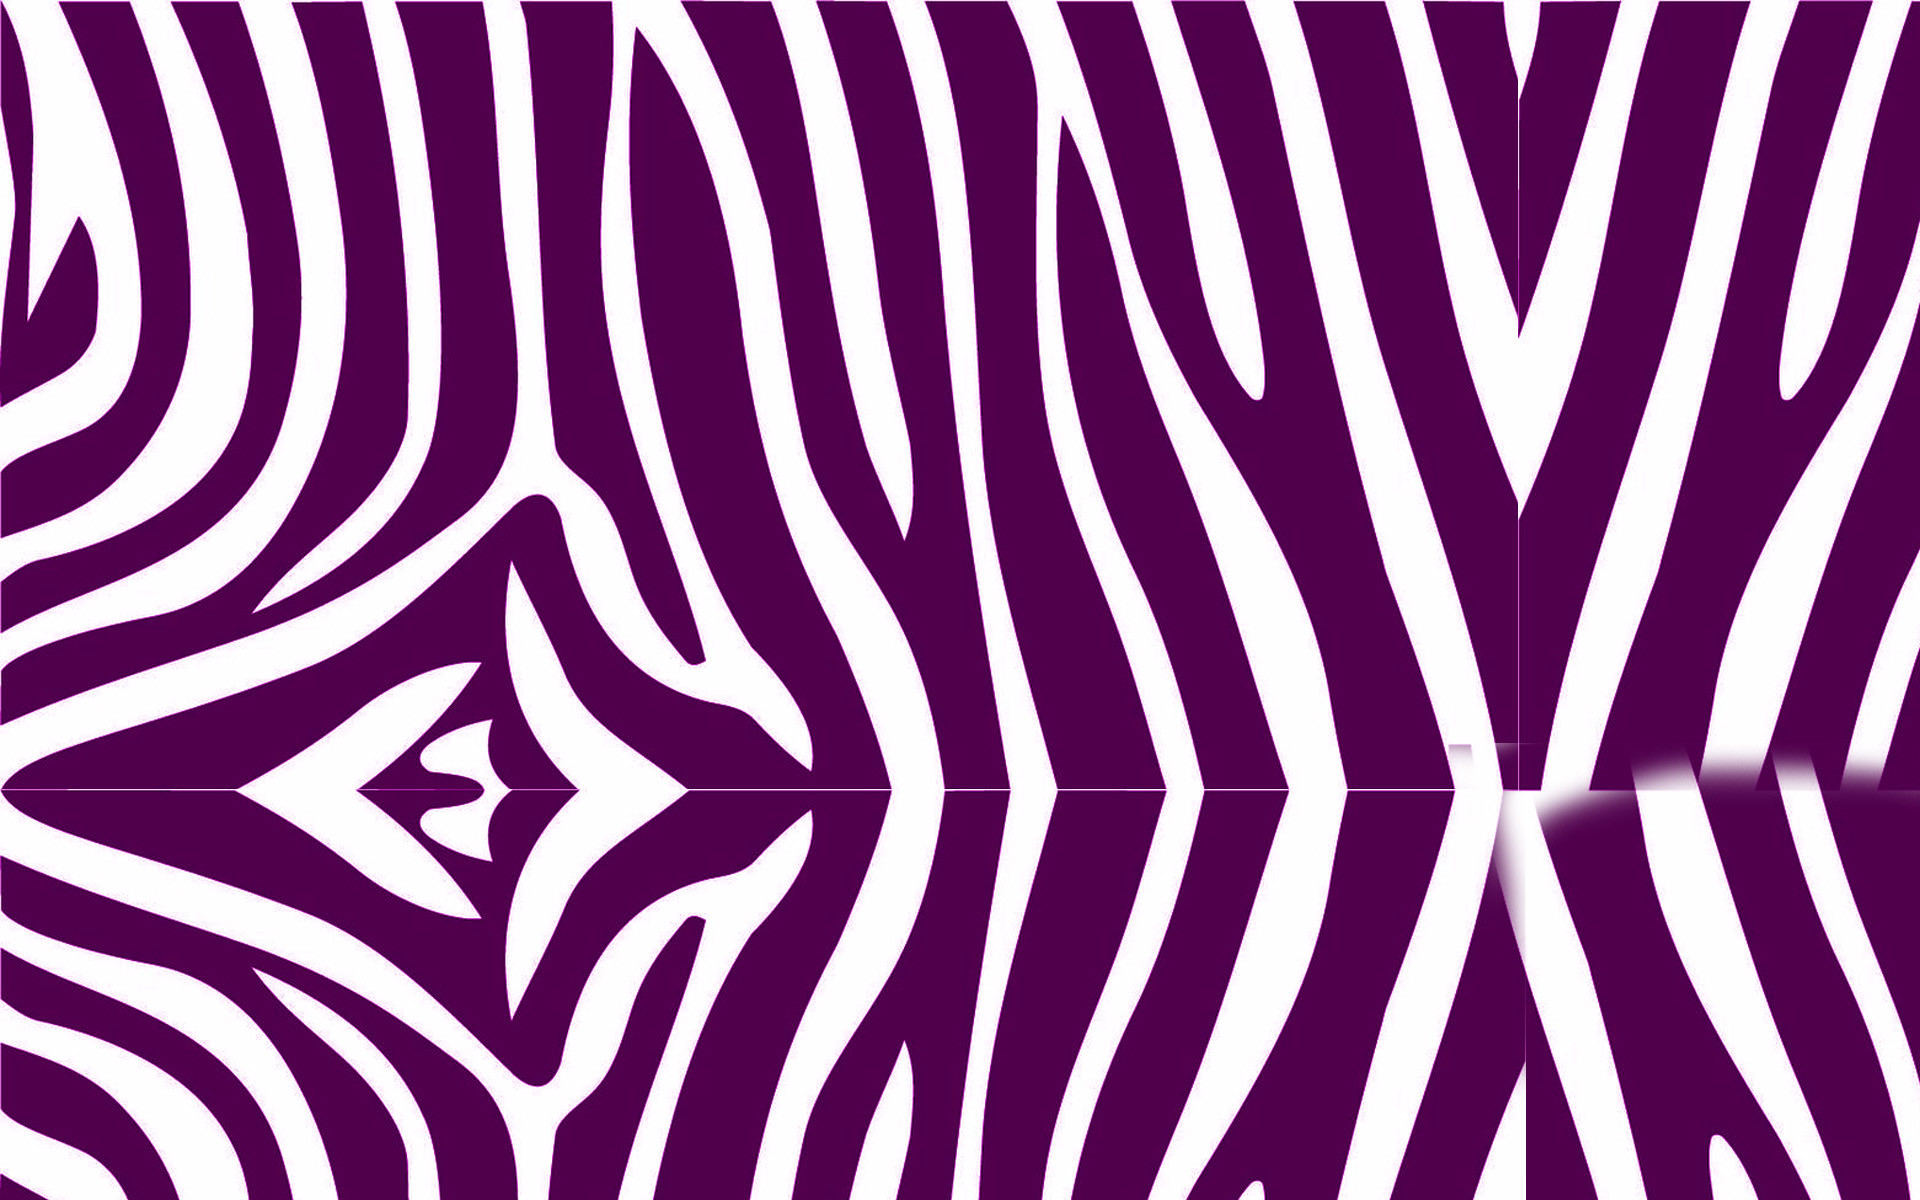 1920x1200 Zebra Print Wallpaper Pictures - Home Decor IdeasHome Decor Ideas